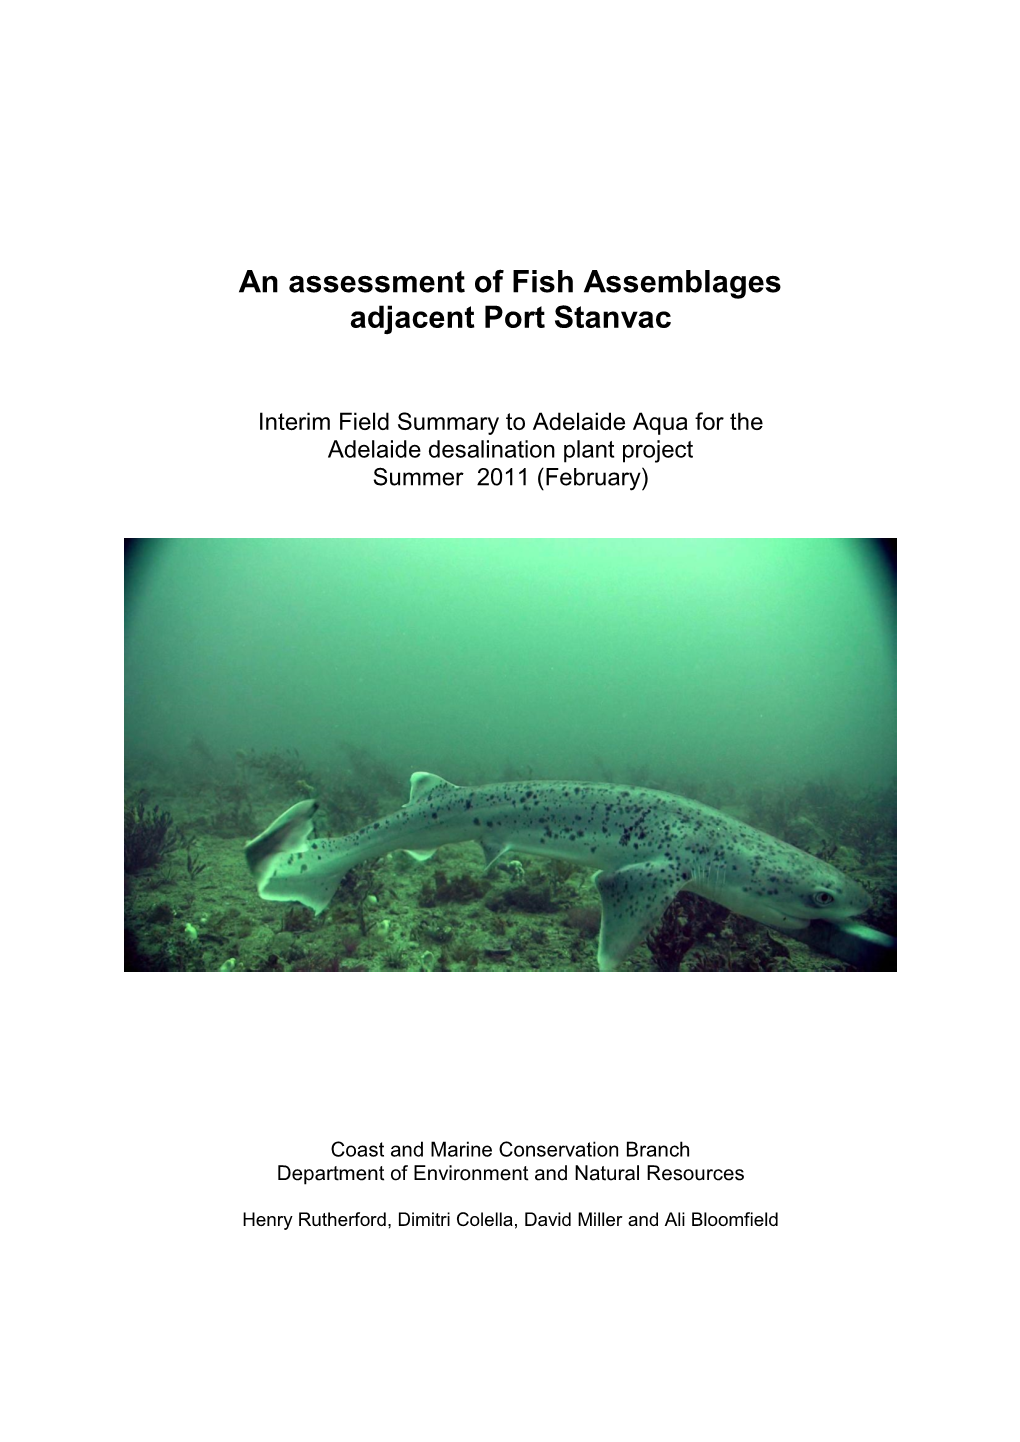 Fish Assemblage Survey Within the Port Stanvac Subtidal Marine